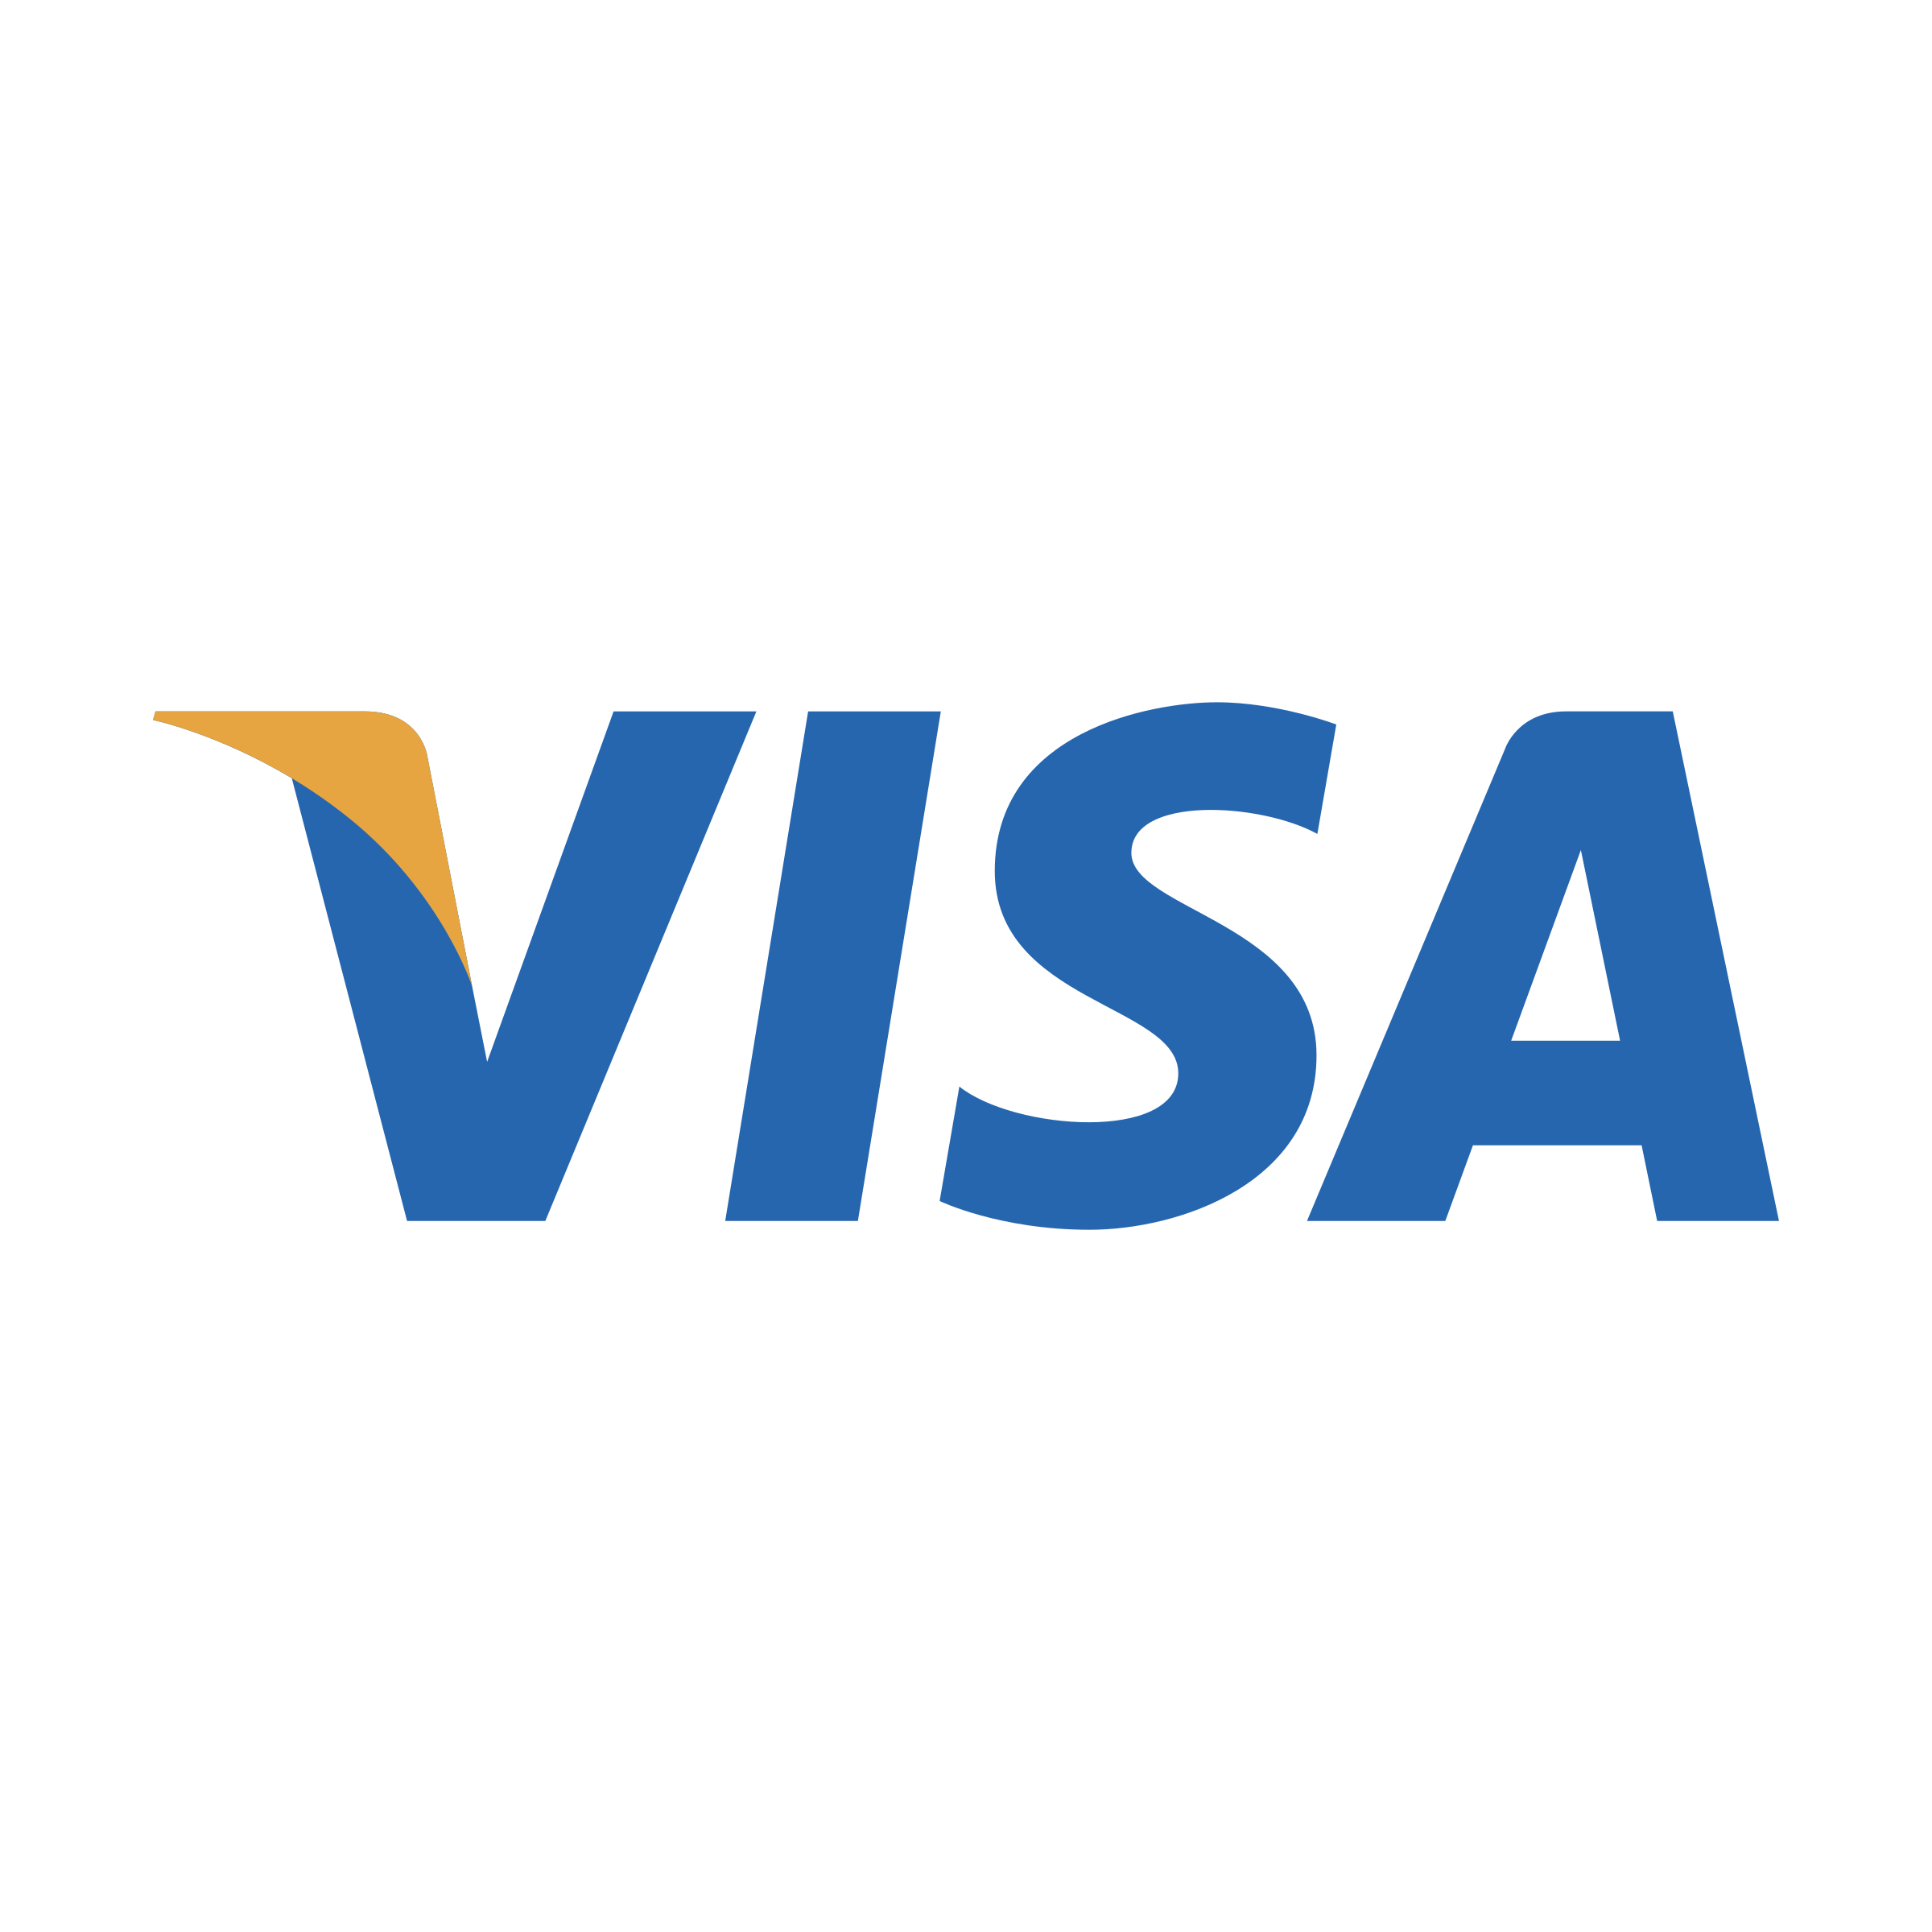 Visa Card Logo PNG Background Isolated Image